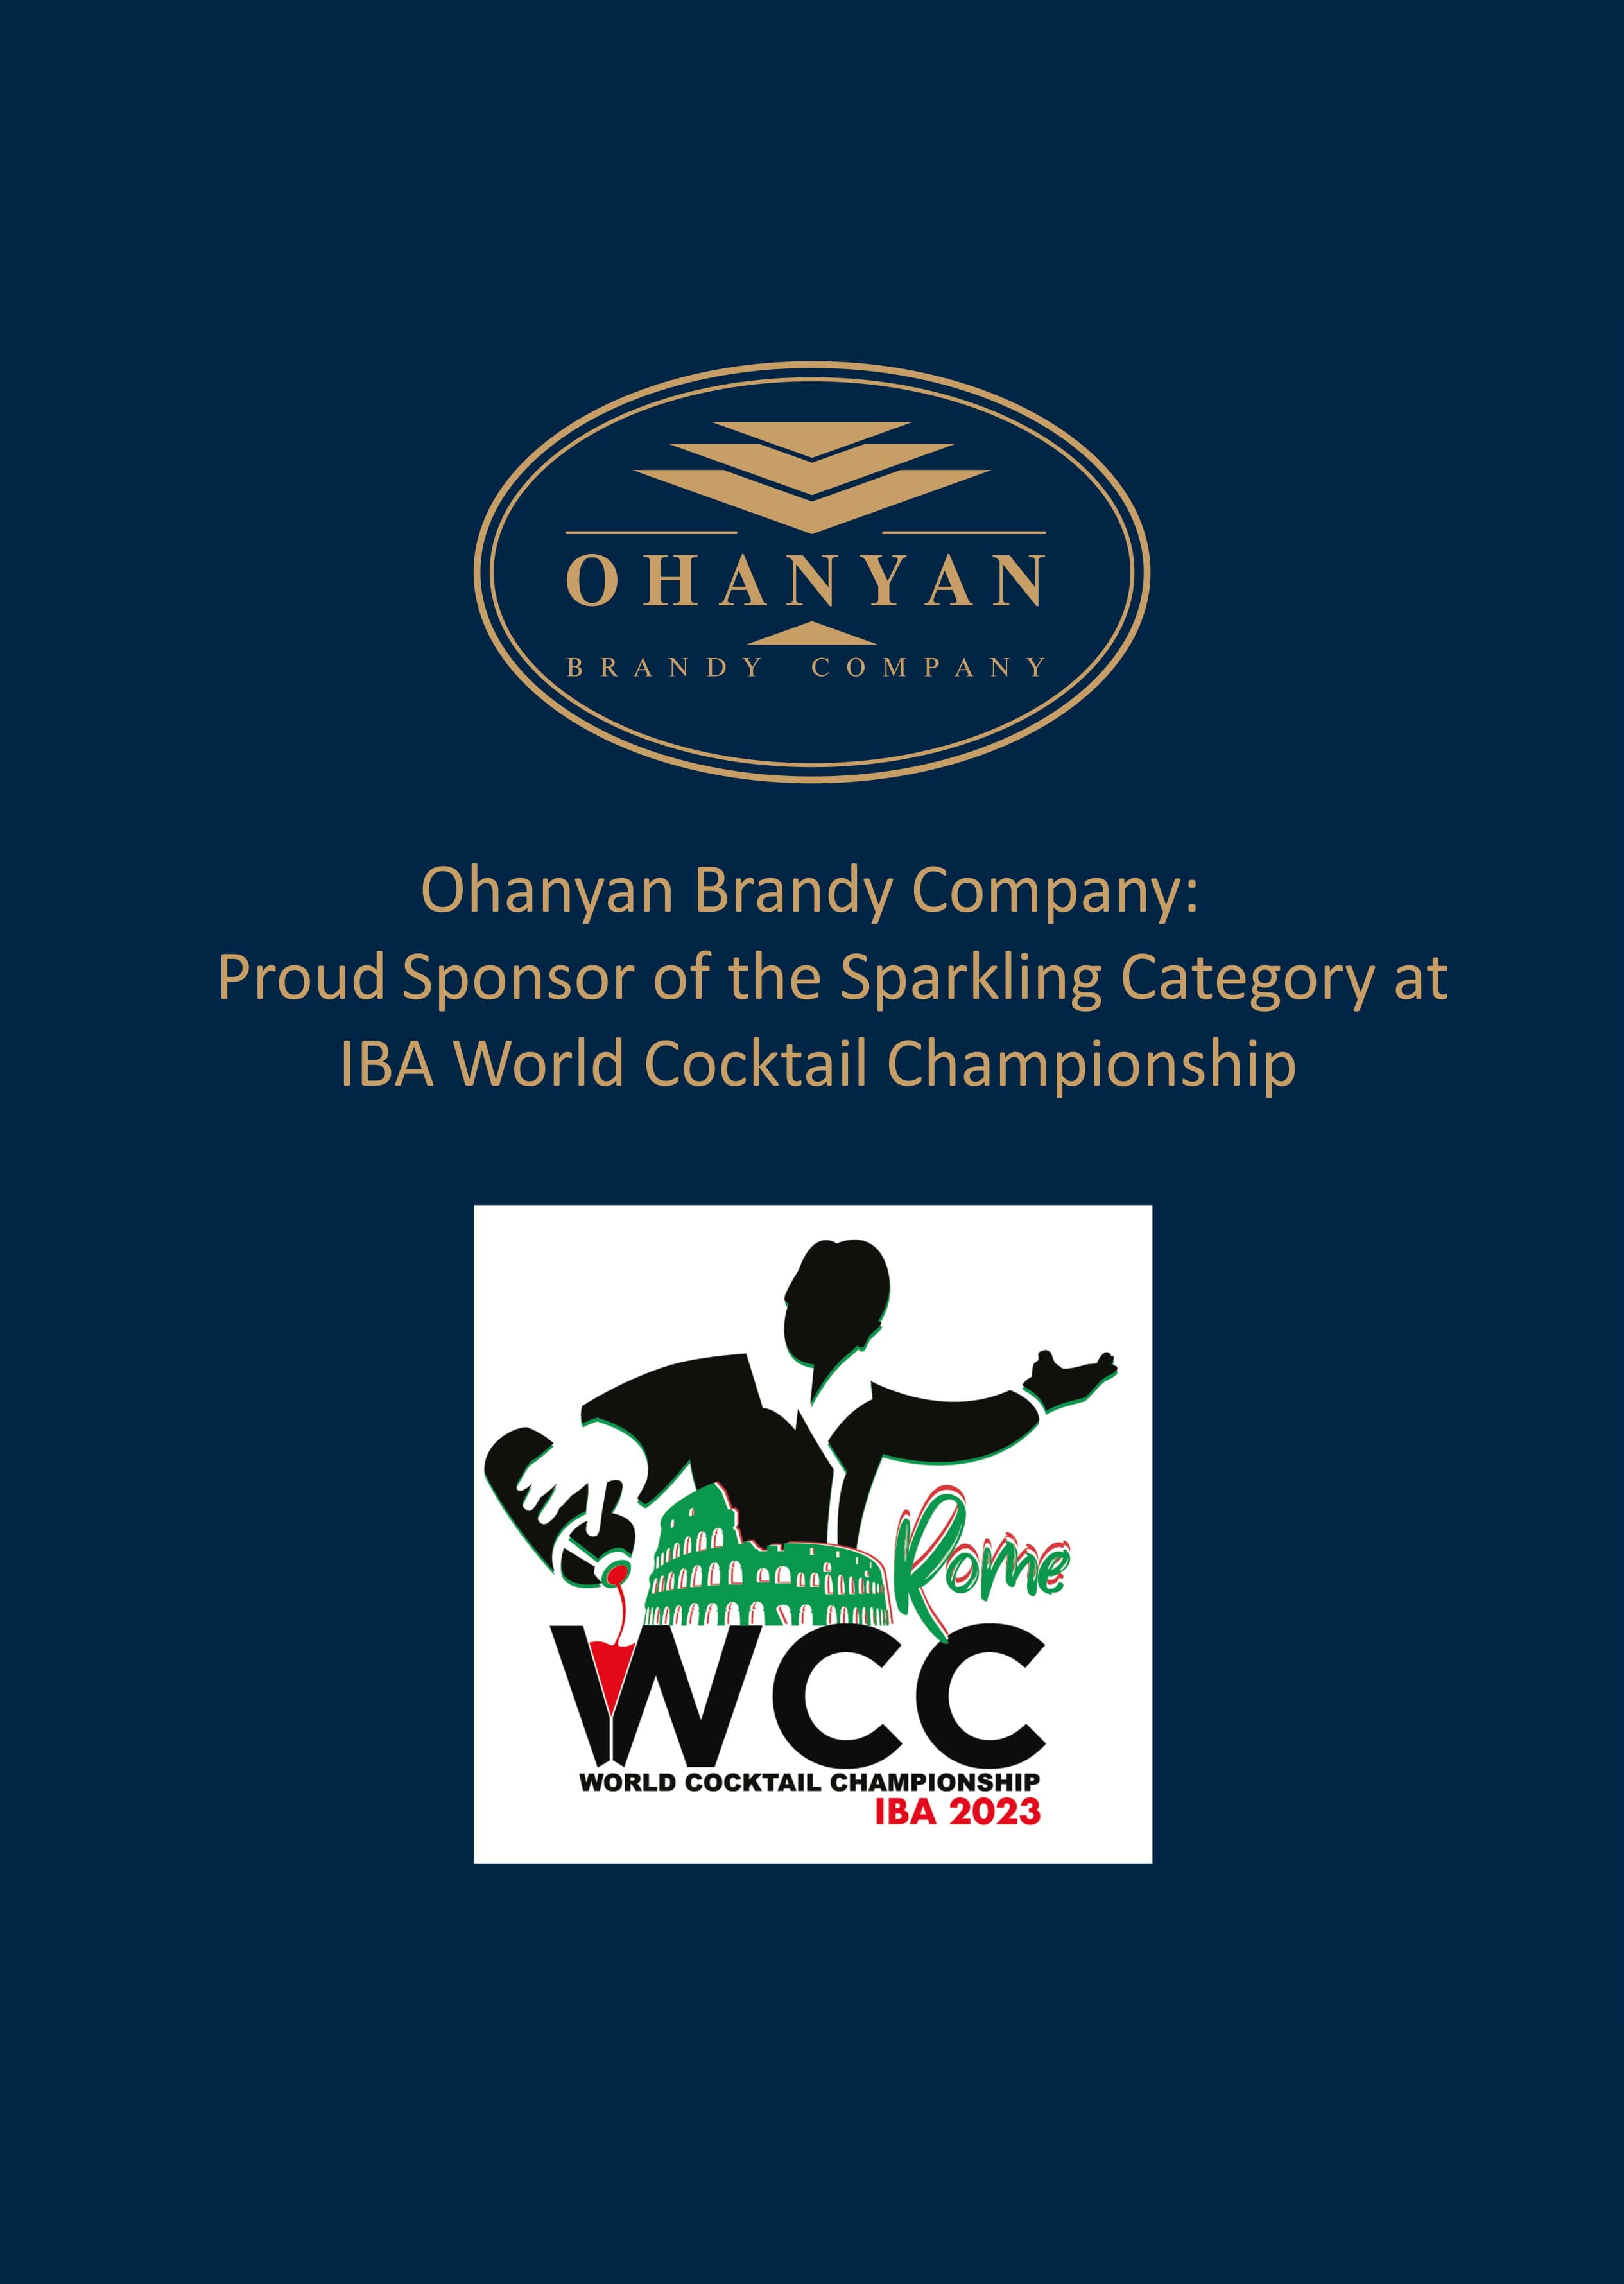 IBA World Cocktail Championship